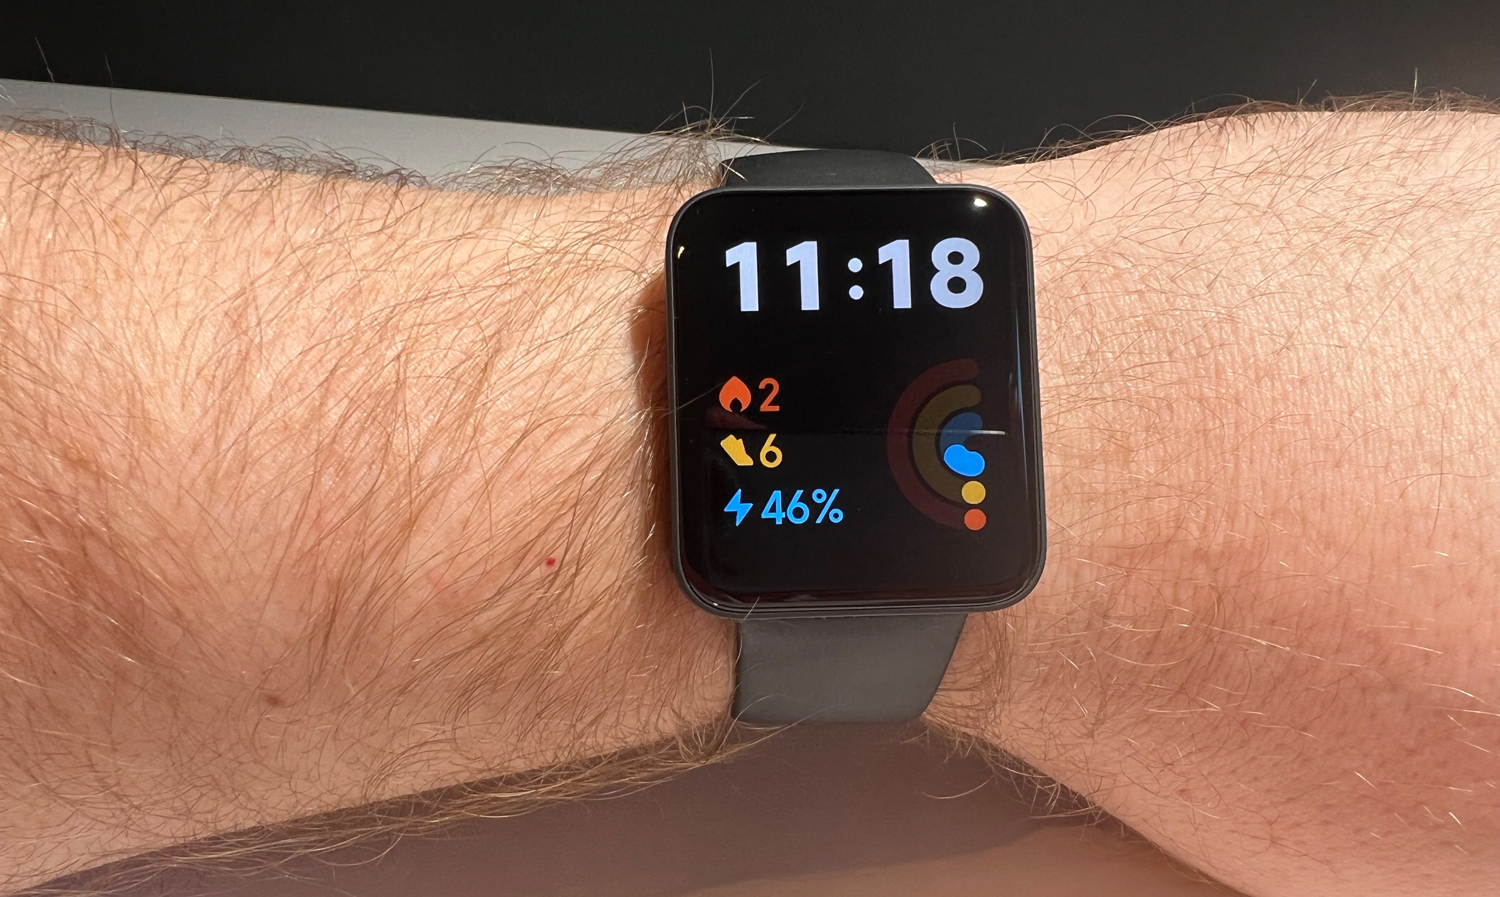 Xiaomi Redmi Watch 2 Lite - bleu - montre intelligente avec sangle